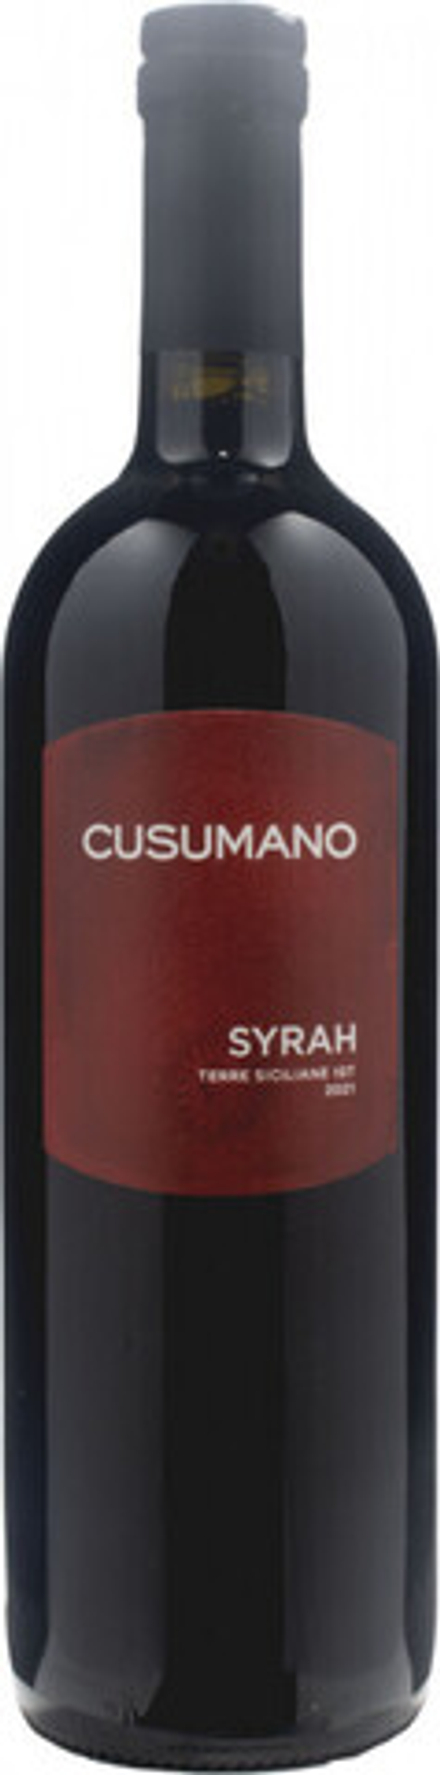 Вино Cusumano Syrah Terre Siciliane IGT, 0,75 л.